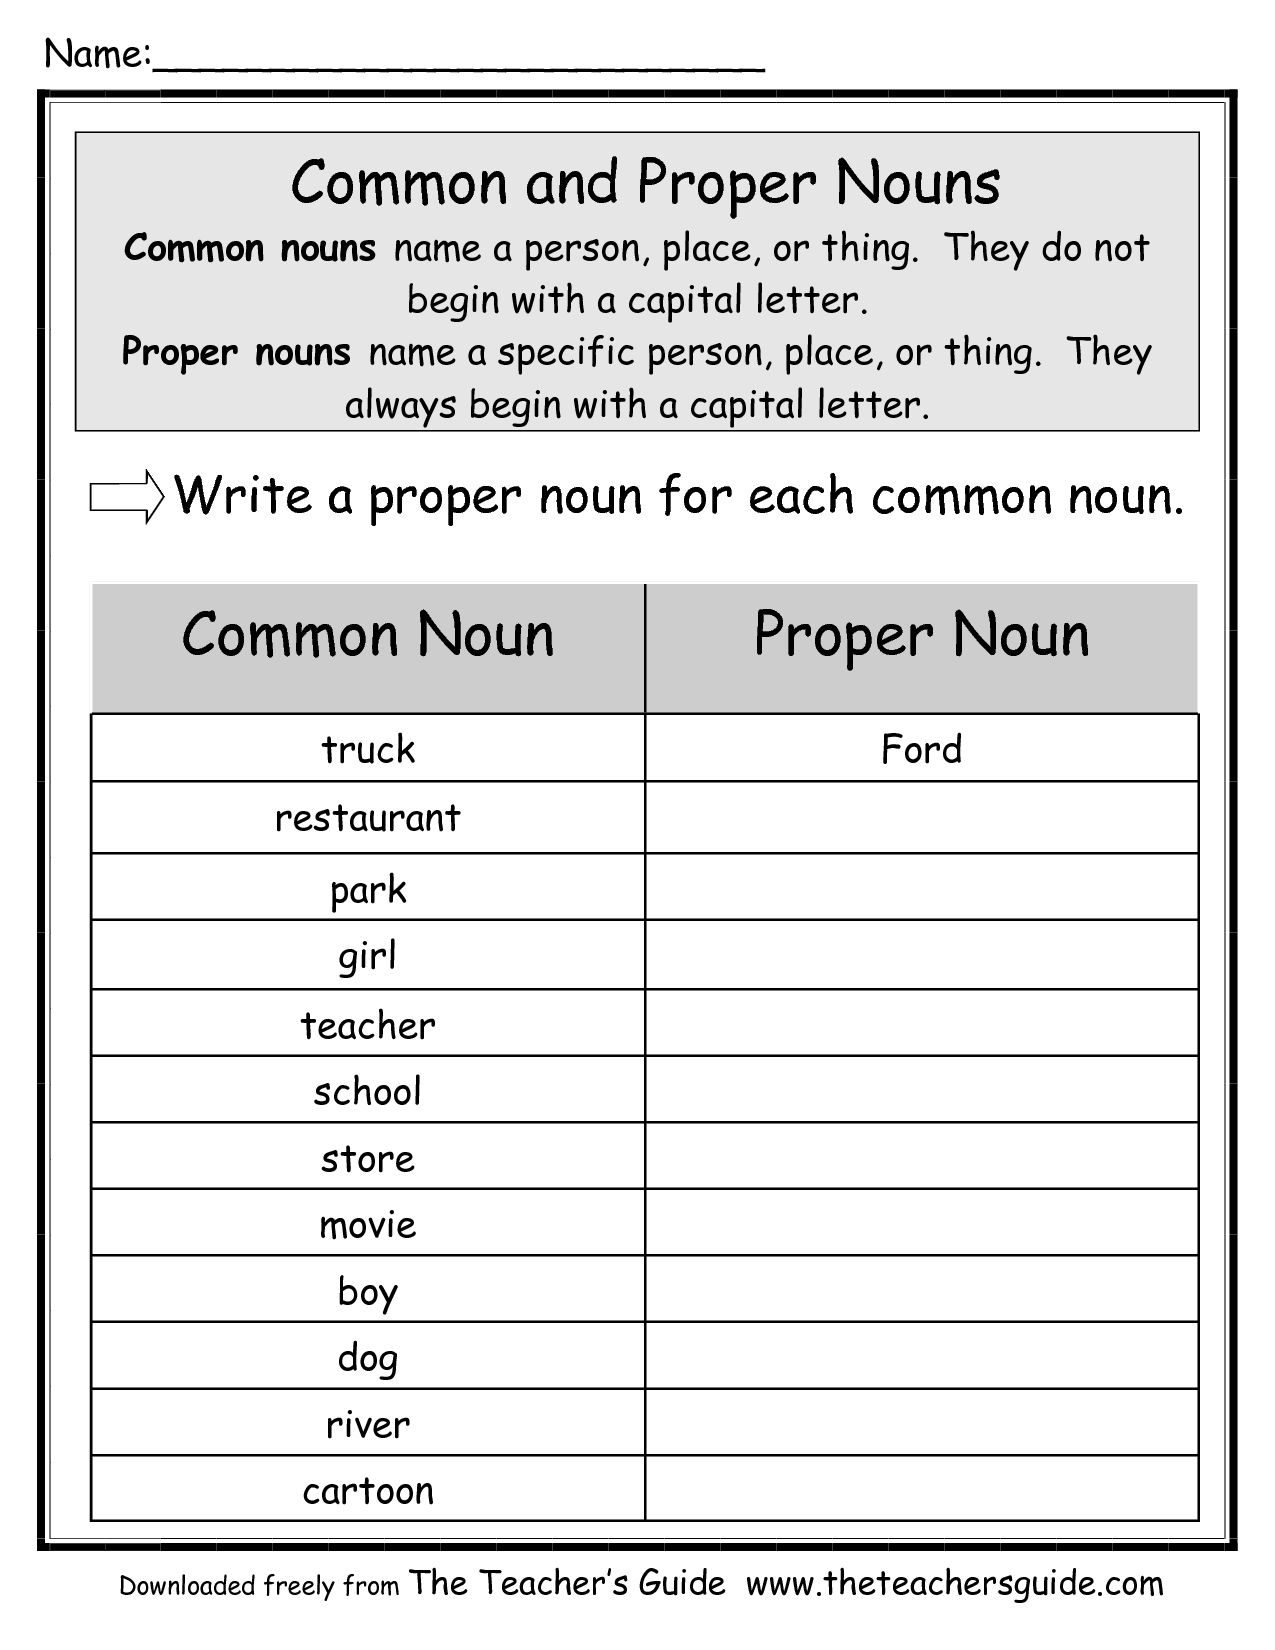 15-best-images-of-proper-pronouns-worksheets-2nd-grade-pronoun